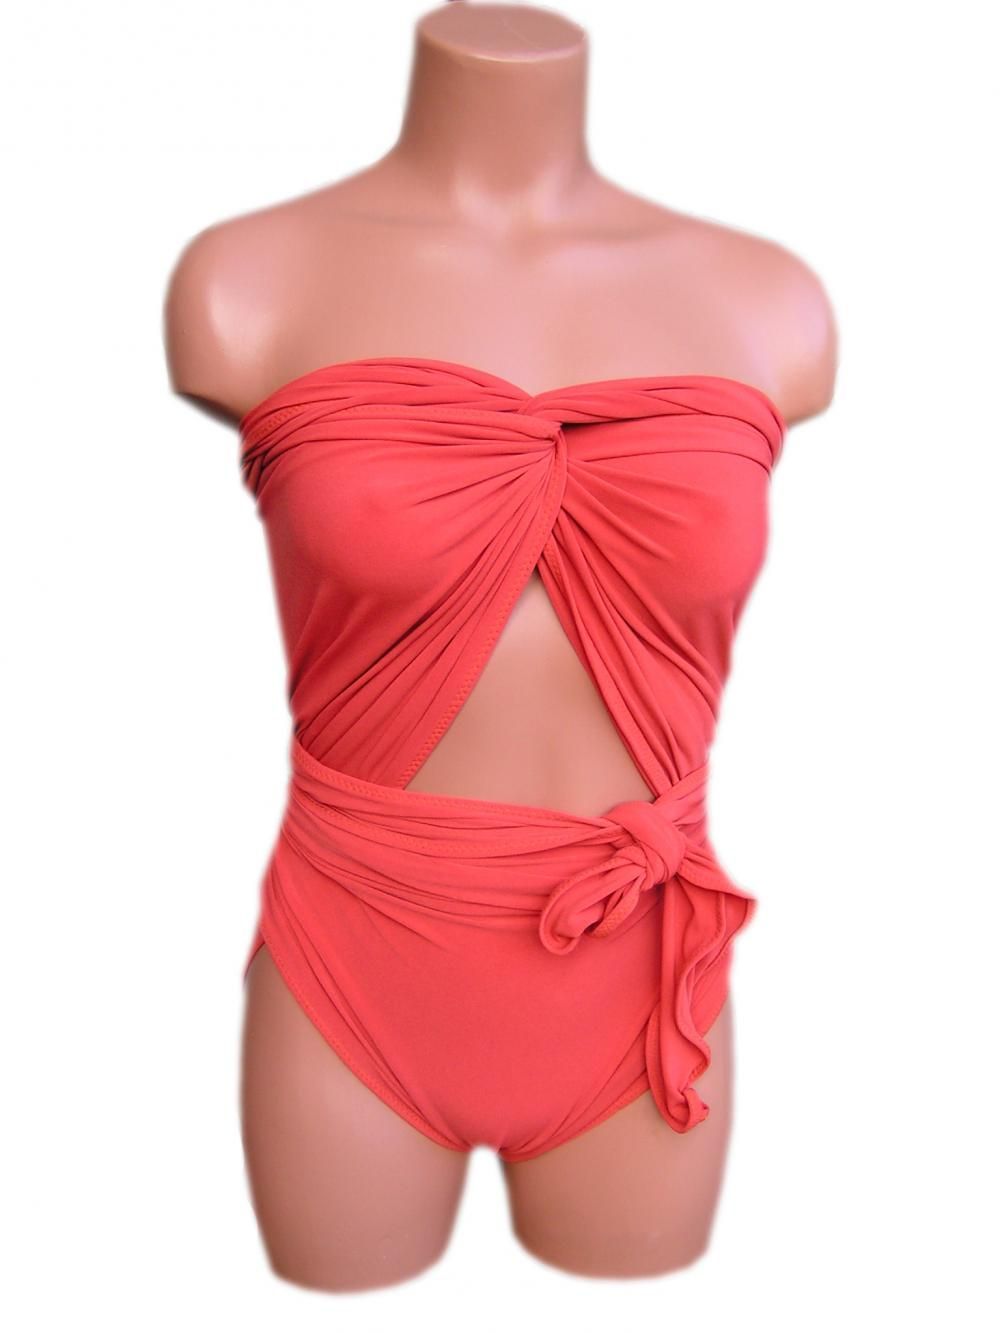 Gorgeous, slimming wrap around bathing suit.